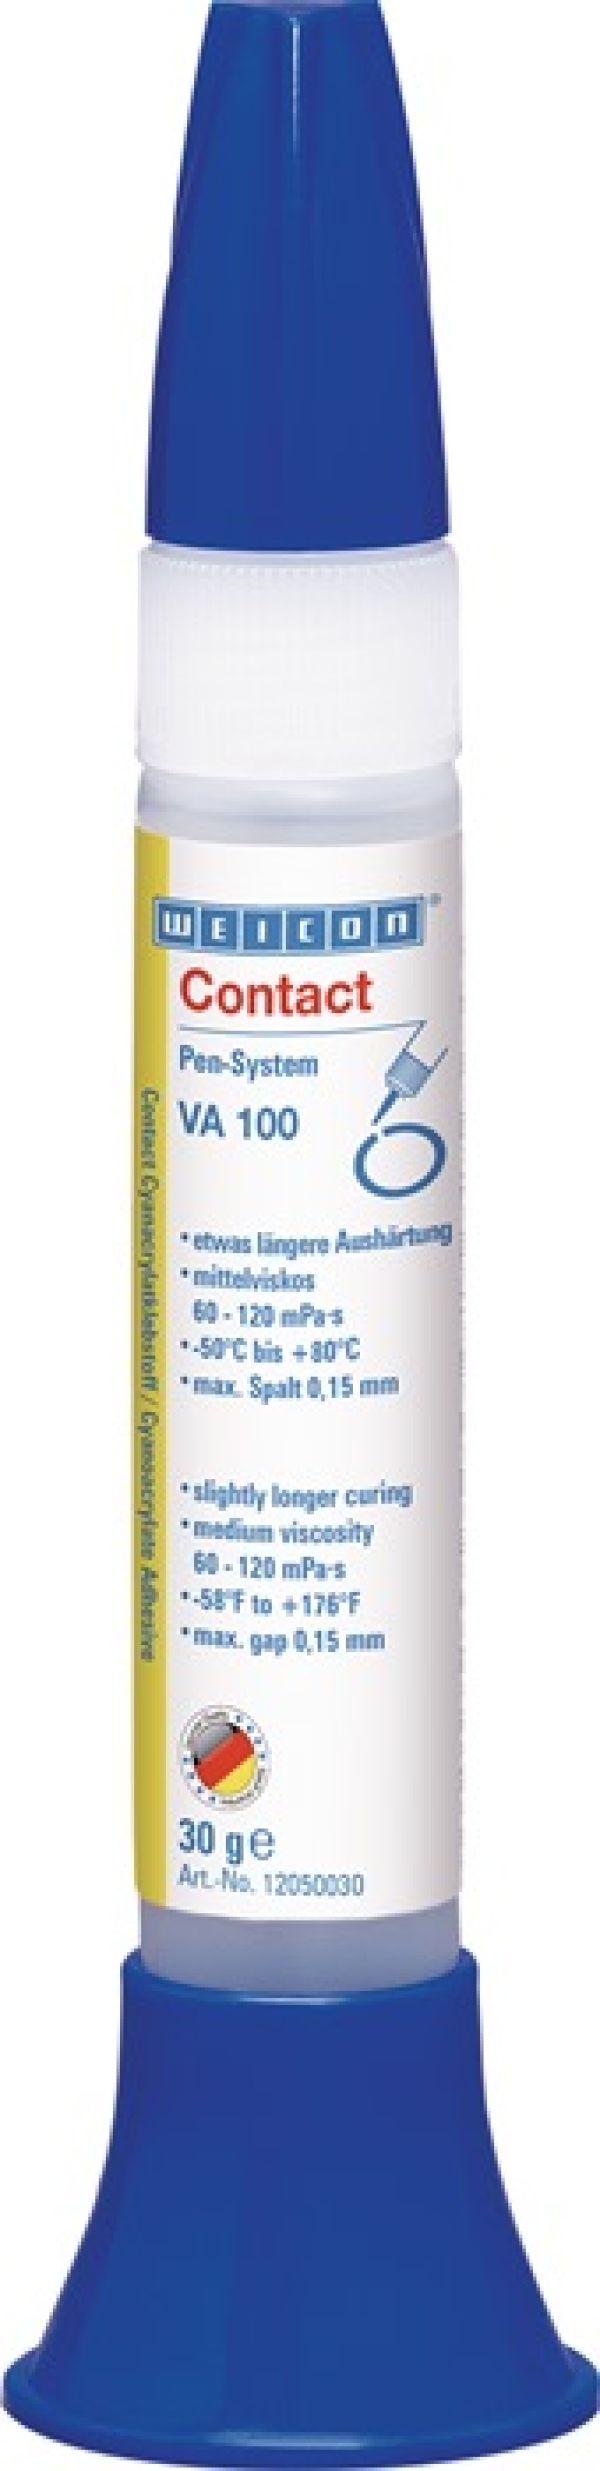 Cyanacrylatklebstoff Contact VA 100 30g farblos Pen-System WEICON